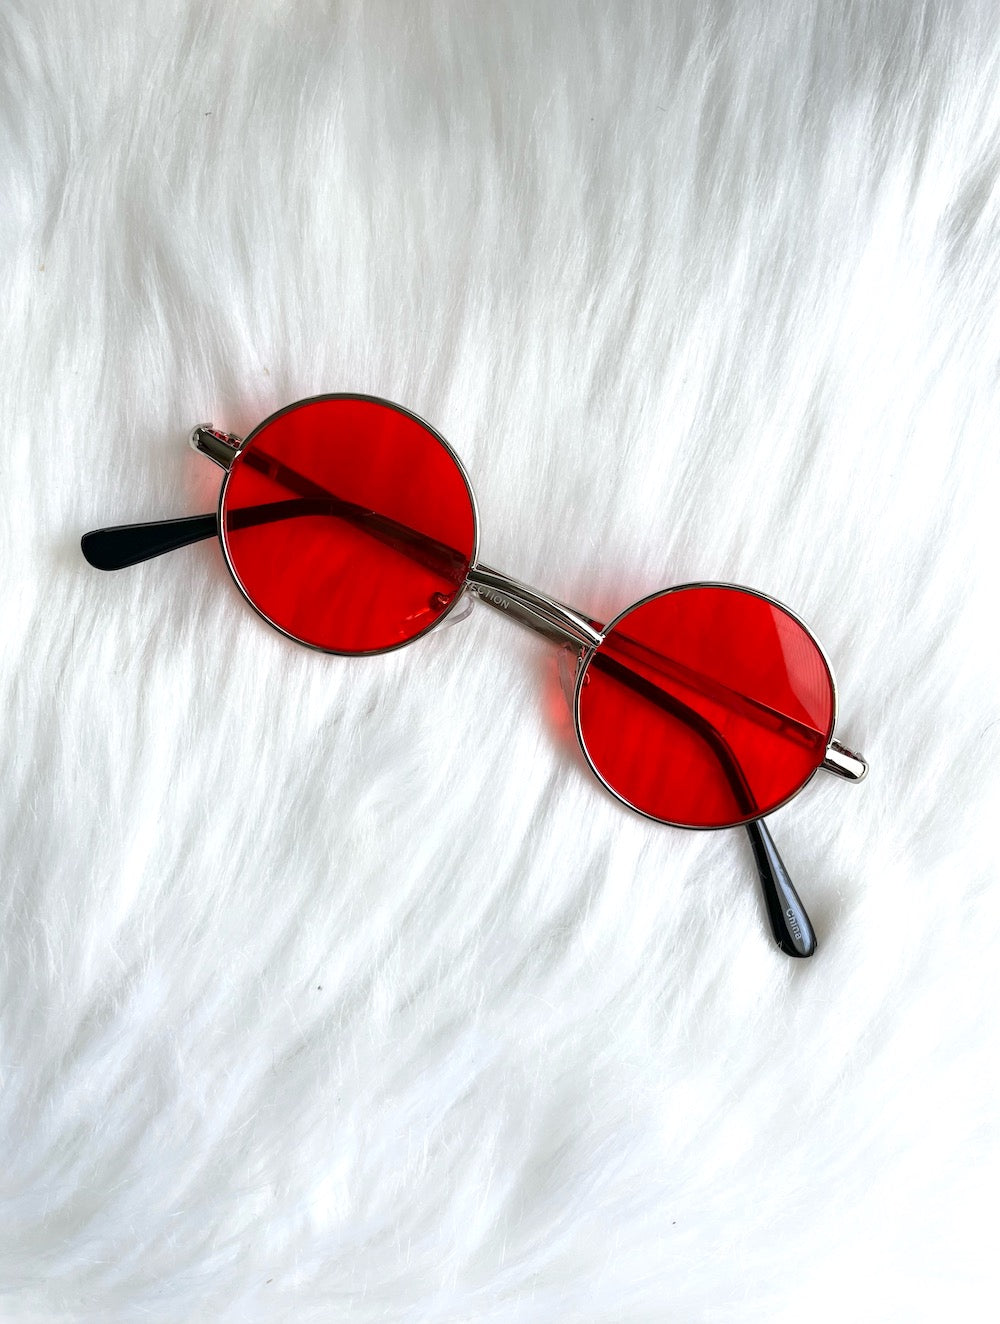 Antique Red Glasses